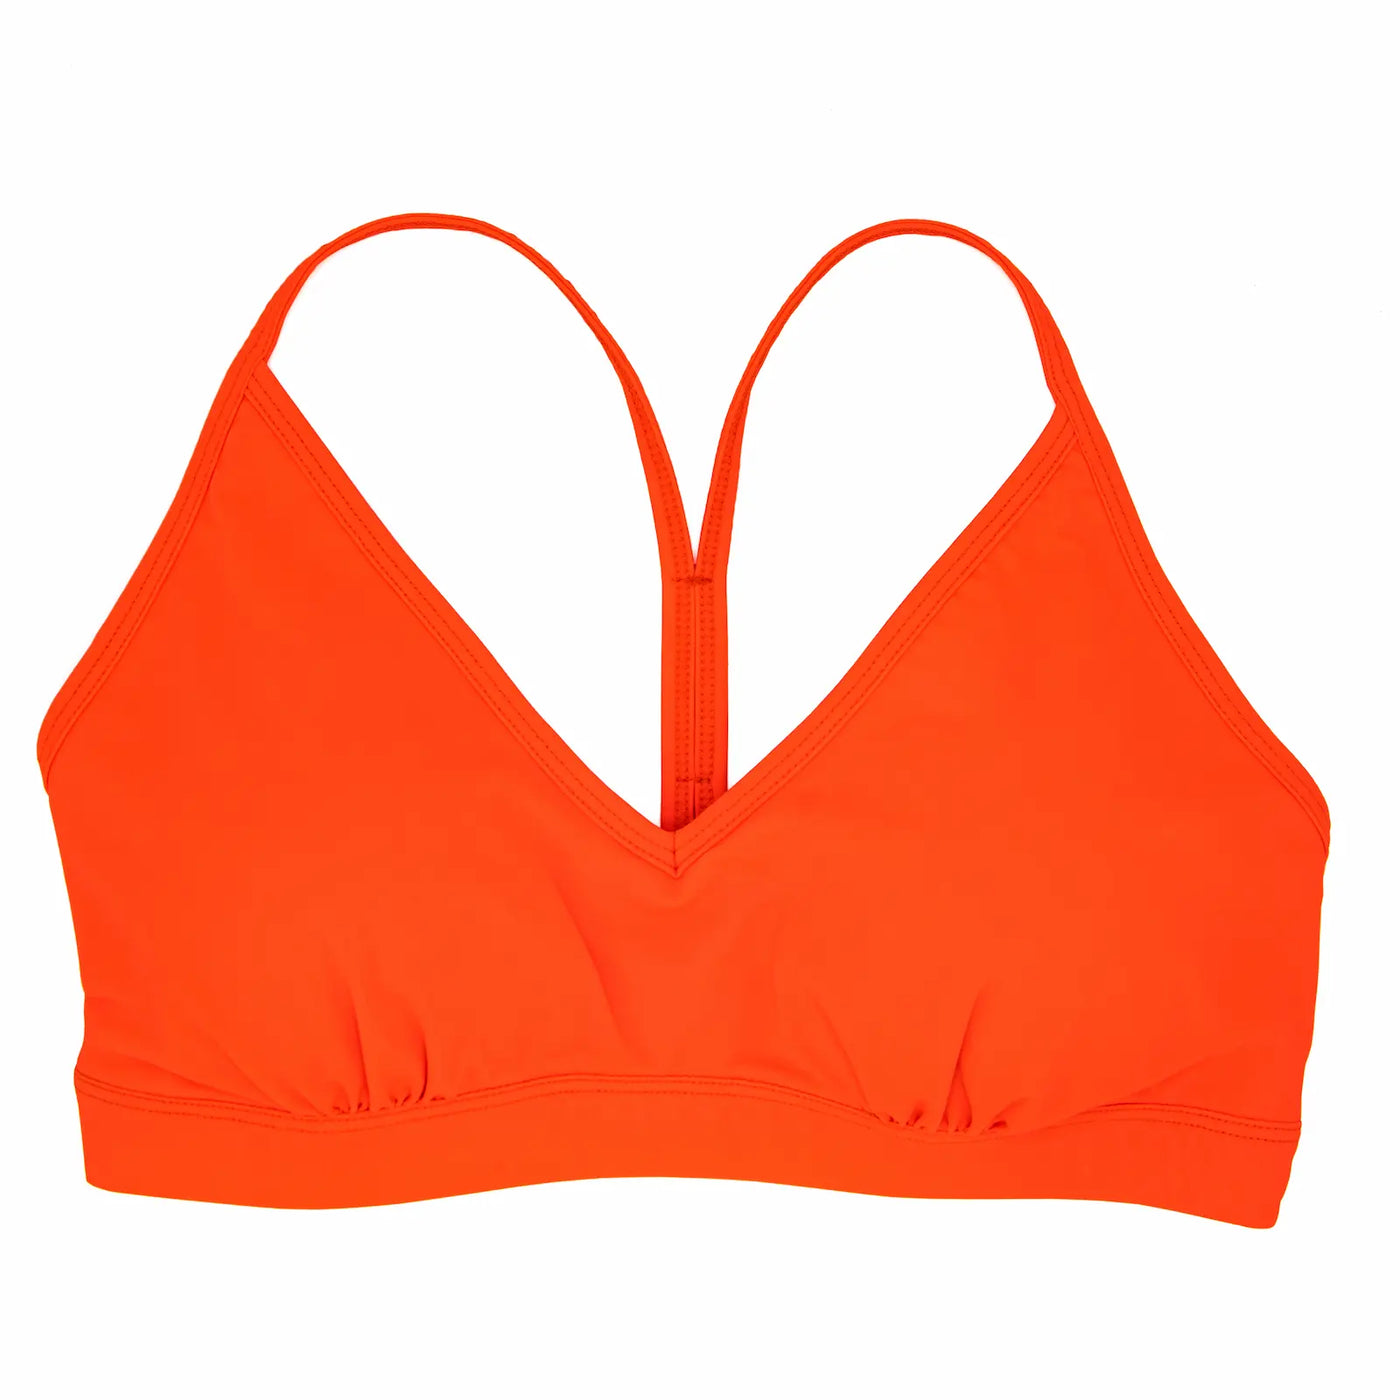 women's sports bra bright orange eco friendly